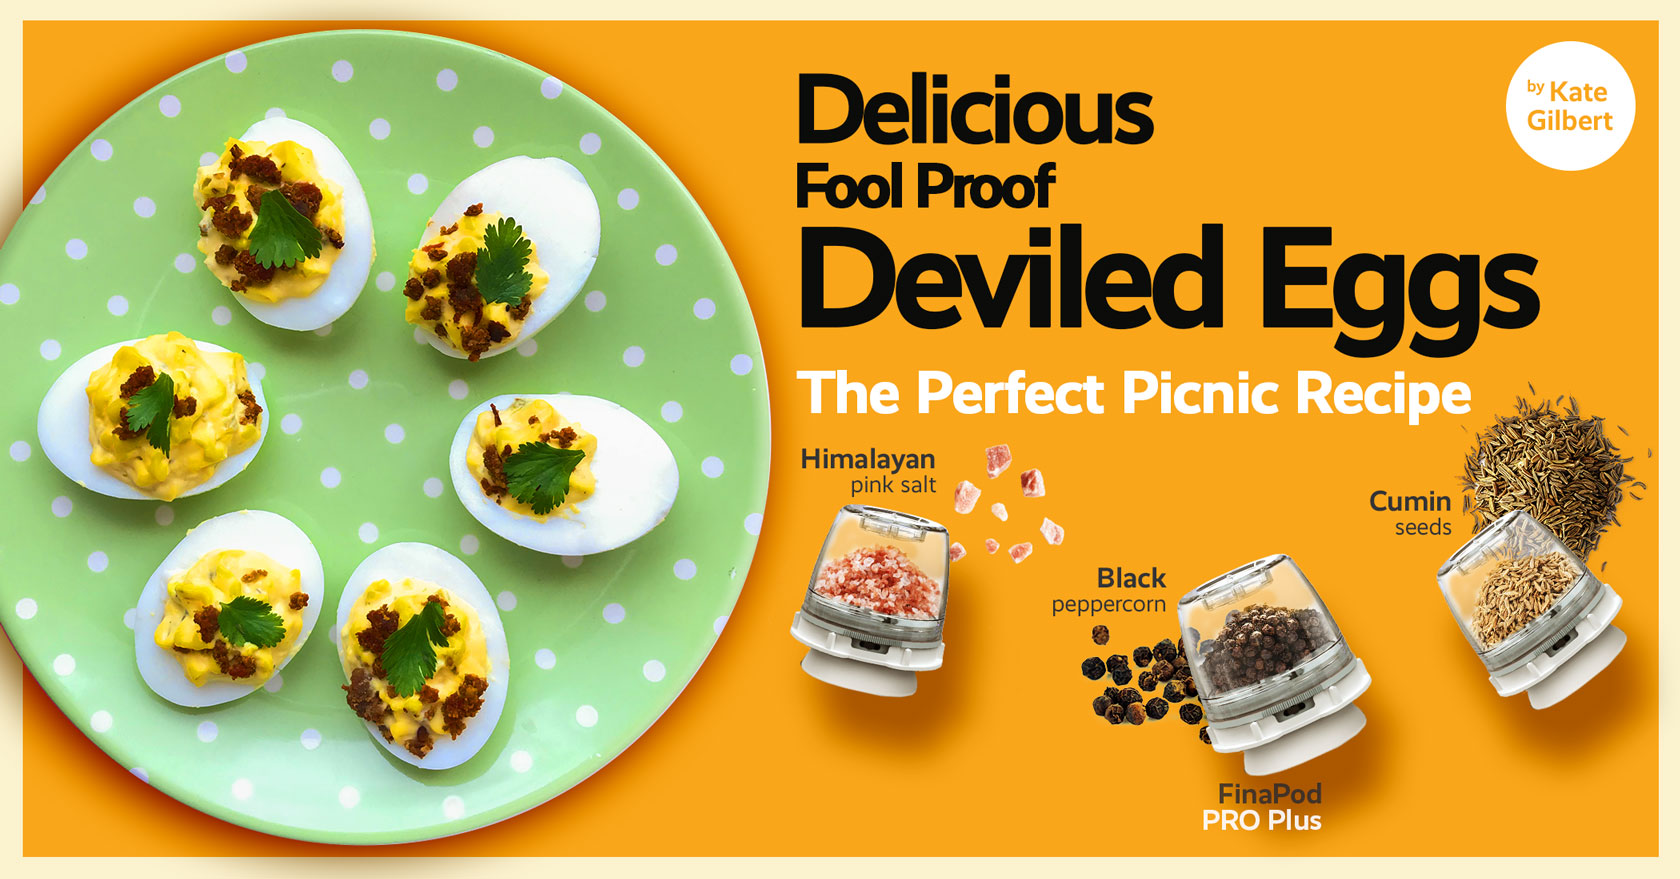 Delicious, Fool Proof Deviled Eggs